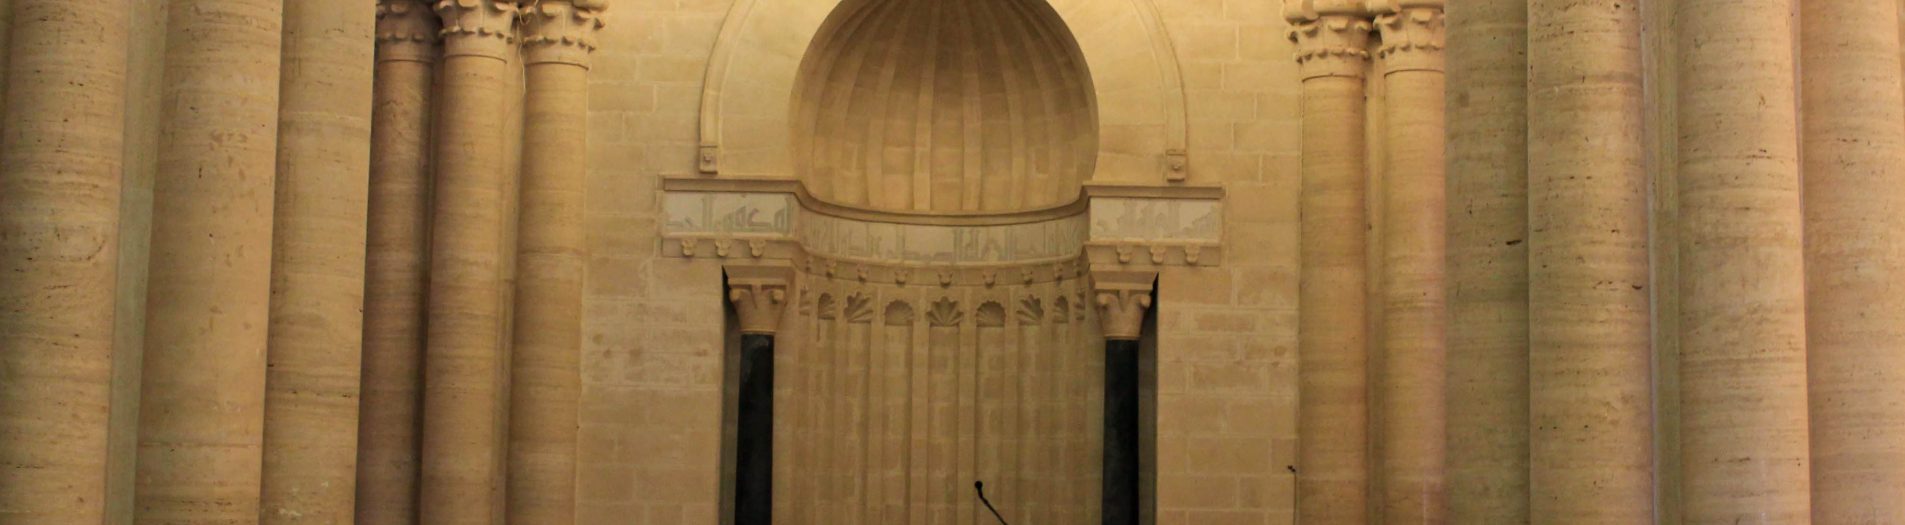 La grande mosquée de Mahdia الجامع الكبير بالمهدية